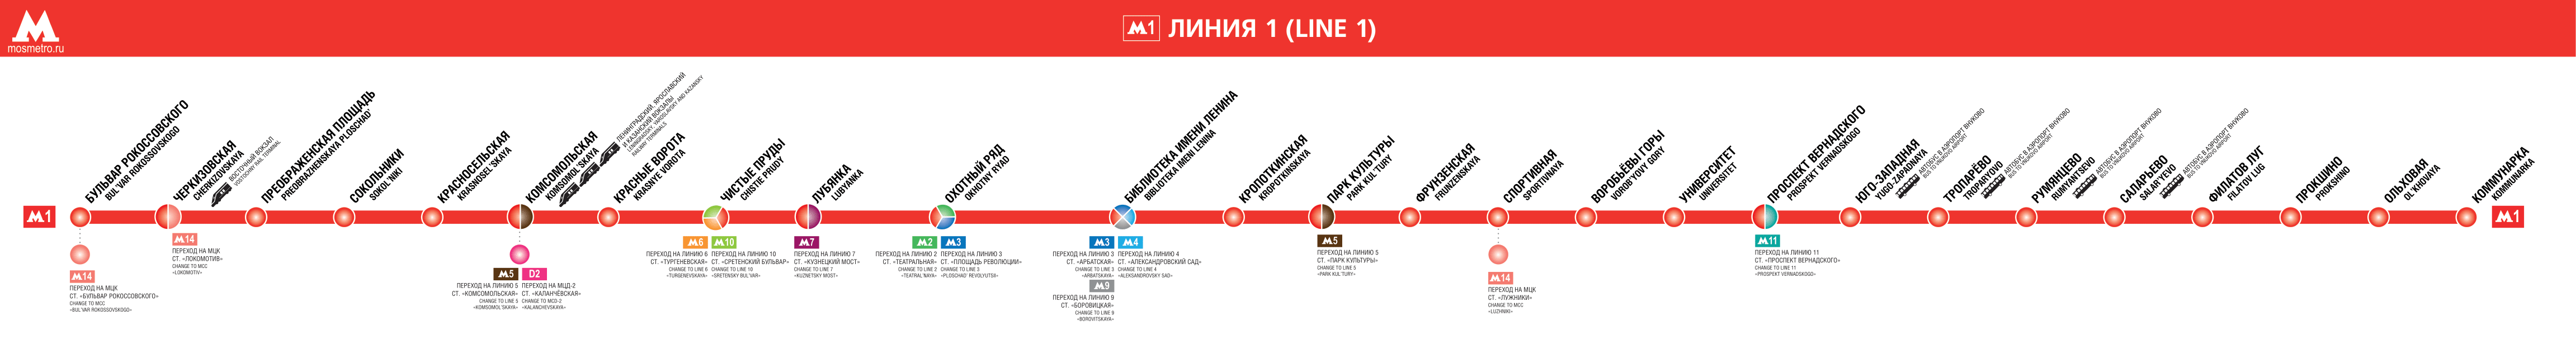 Maskava — Metro — Maps of Individual Lines; Maskava — Metro — [1] Sokolnicheskaya Line